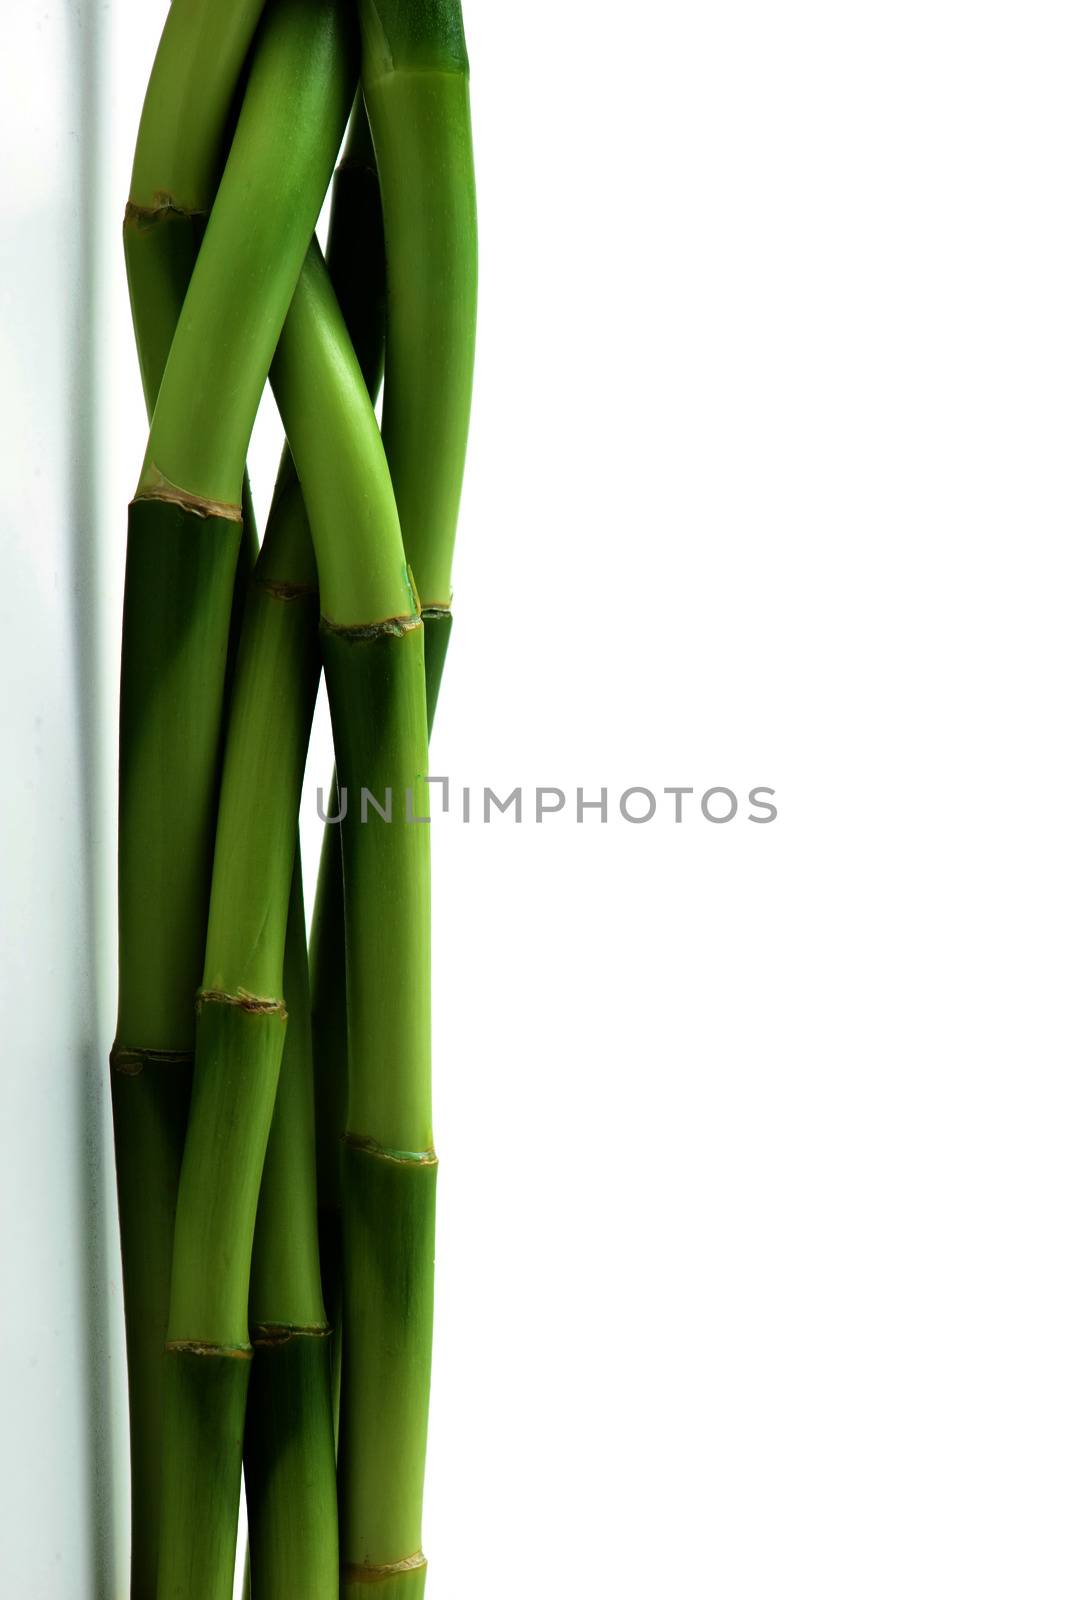 bamboo stem by antpkr